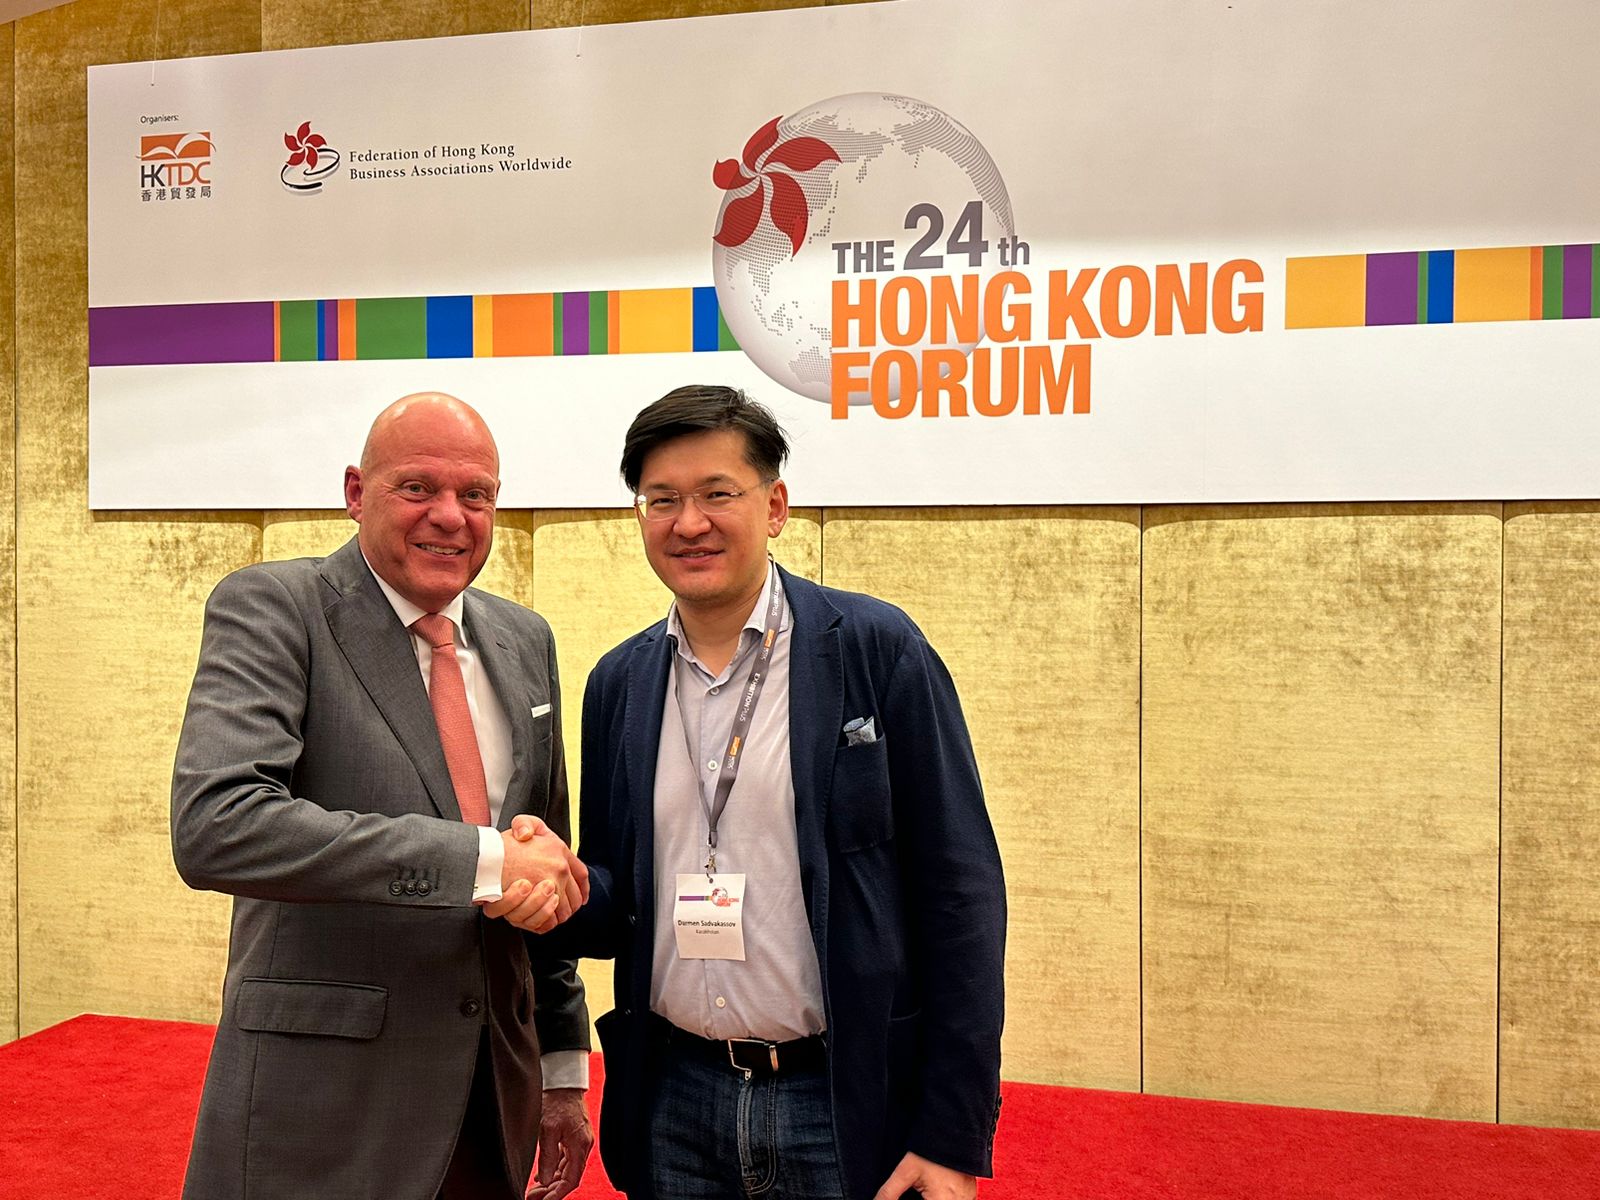 Президент Федерации бизнес-ассоциаций Гонконга по всему миру Ханс Поулис и глава Hong Kong-Kazakhstan Business Association Дармен Садвакасов